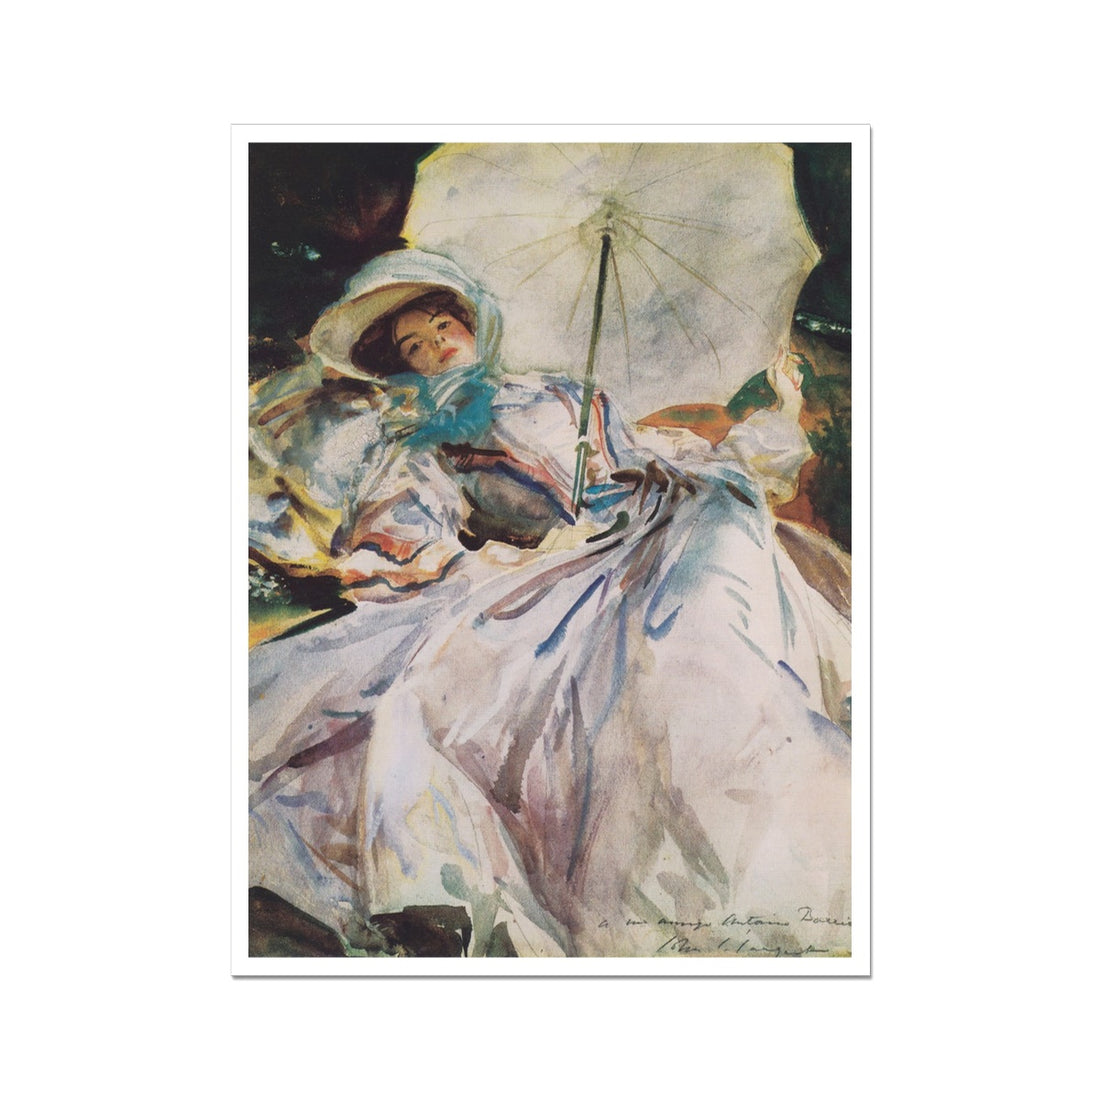 Lady with Parasole, John Singer Sargent, 1900 Reproduction,  Giclée Print Watercolor